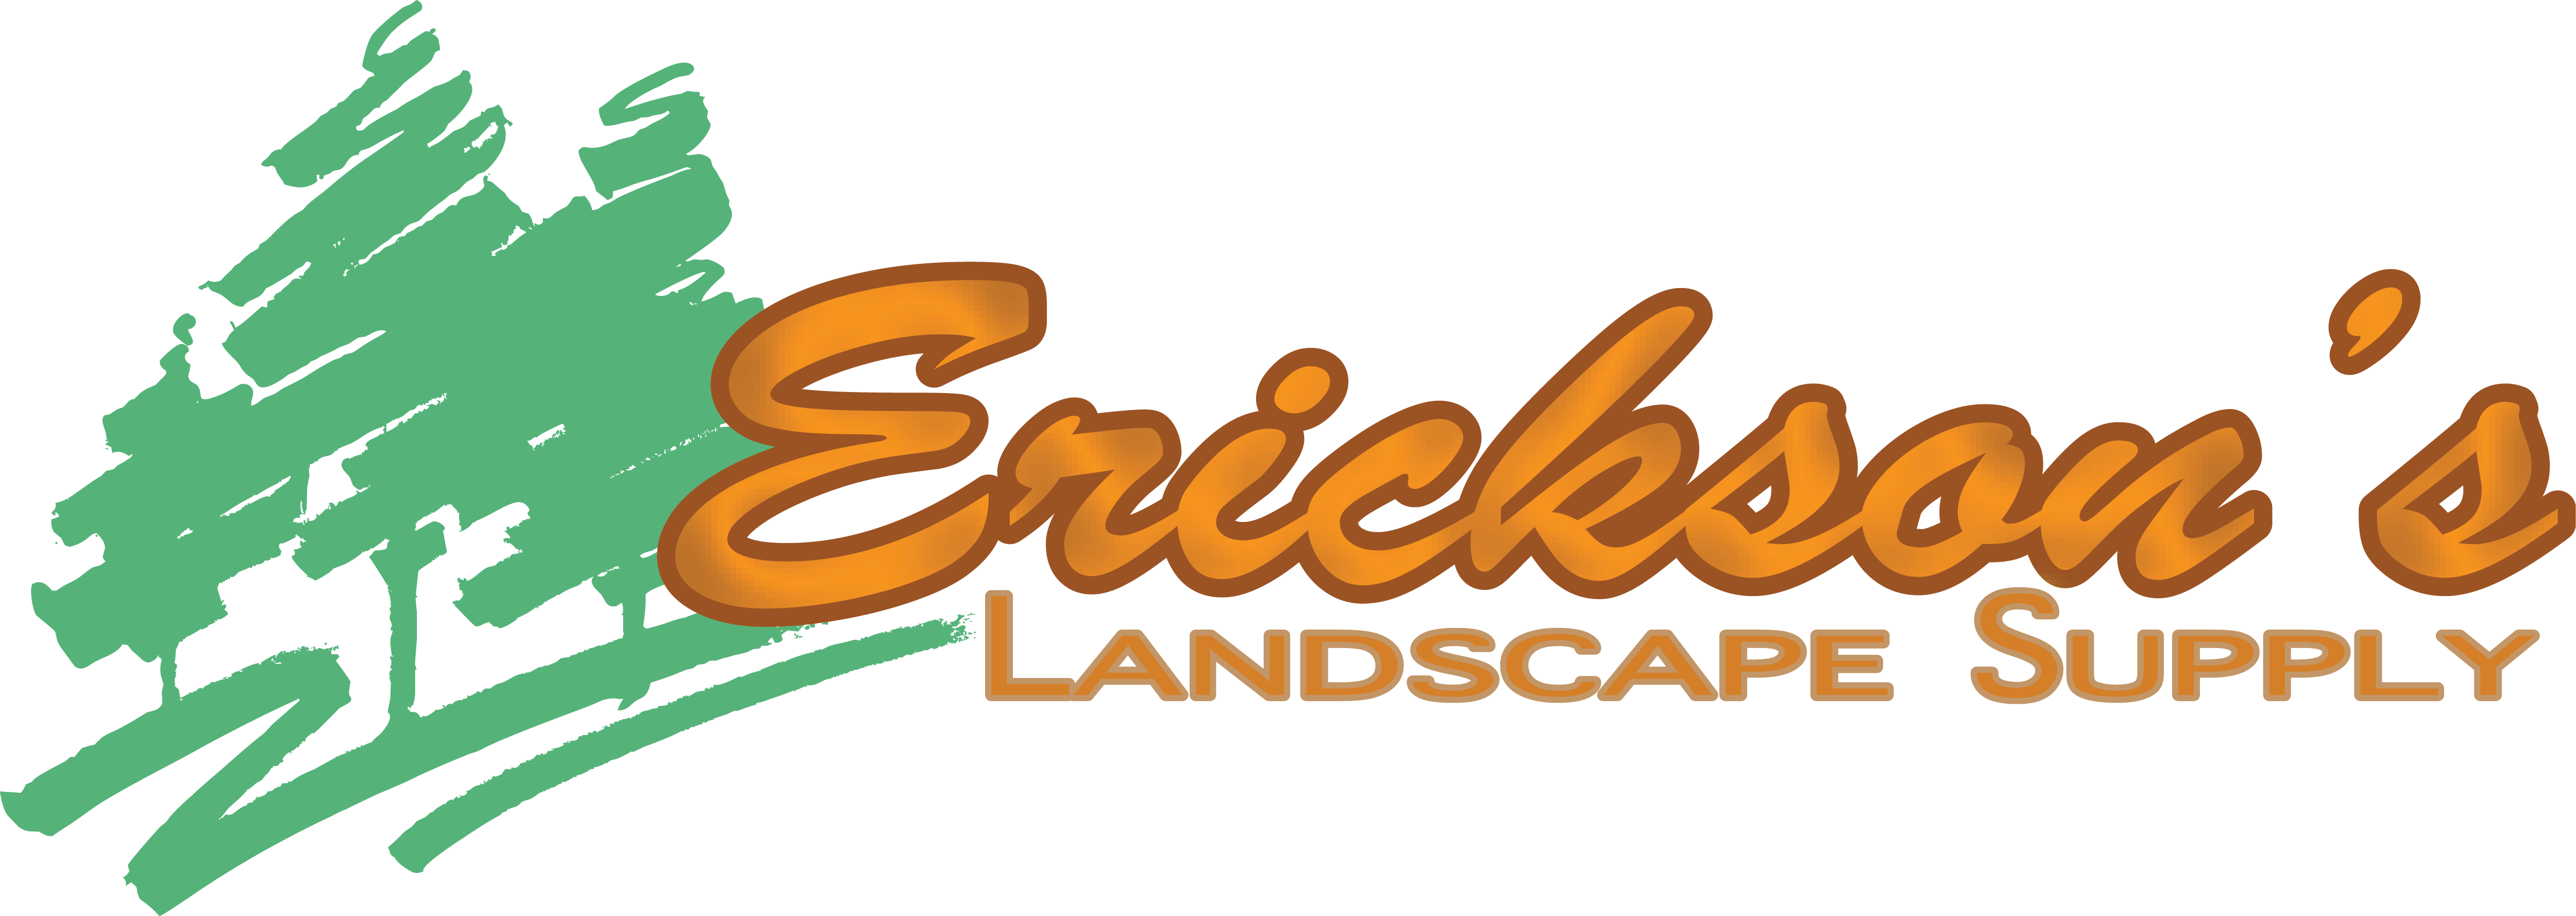 Erickson's Landscape Supply